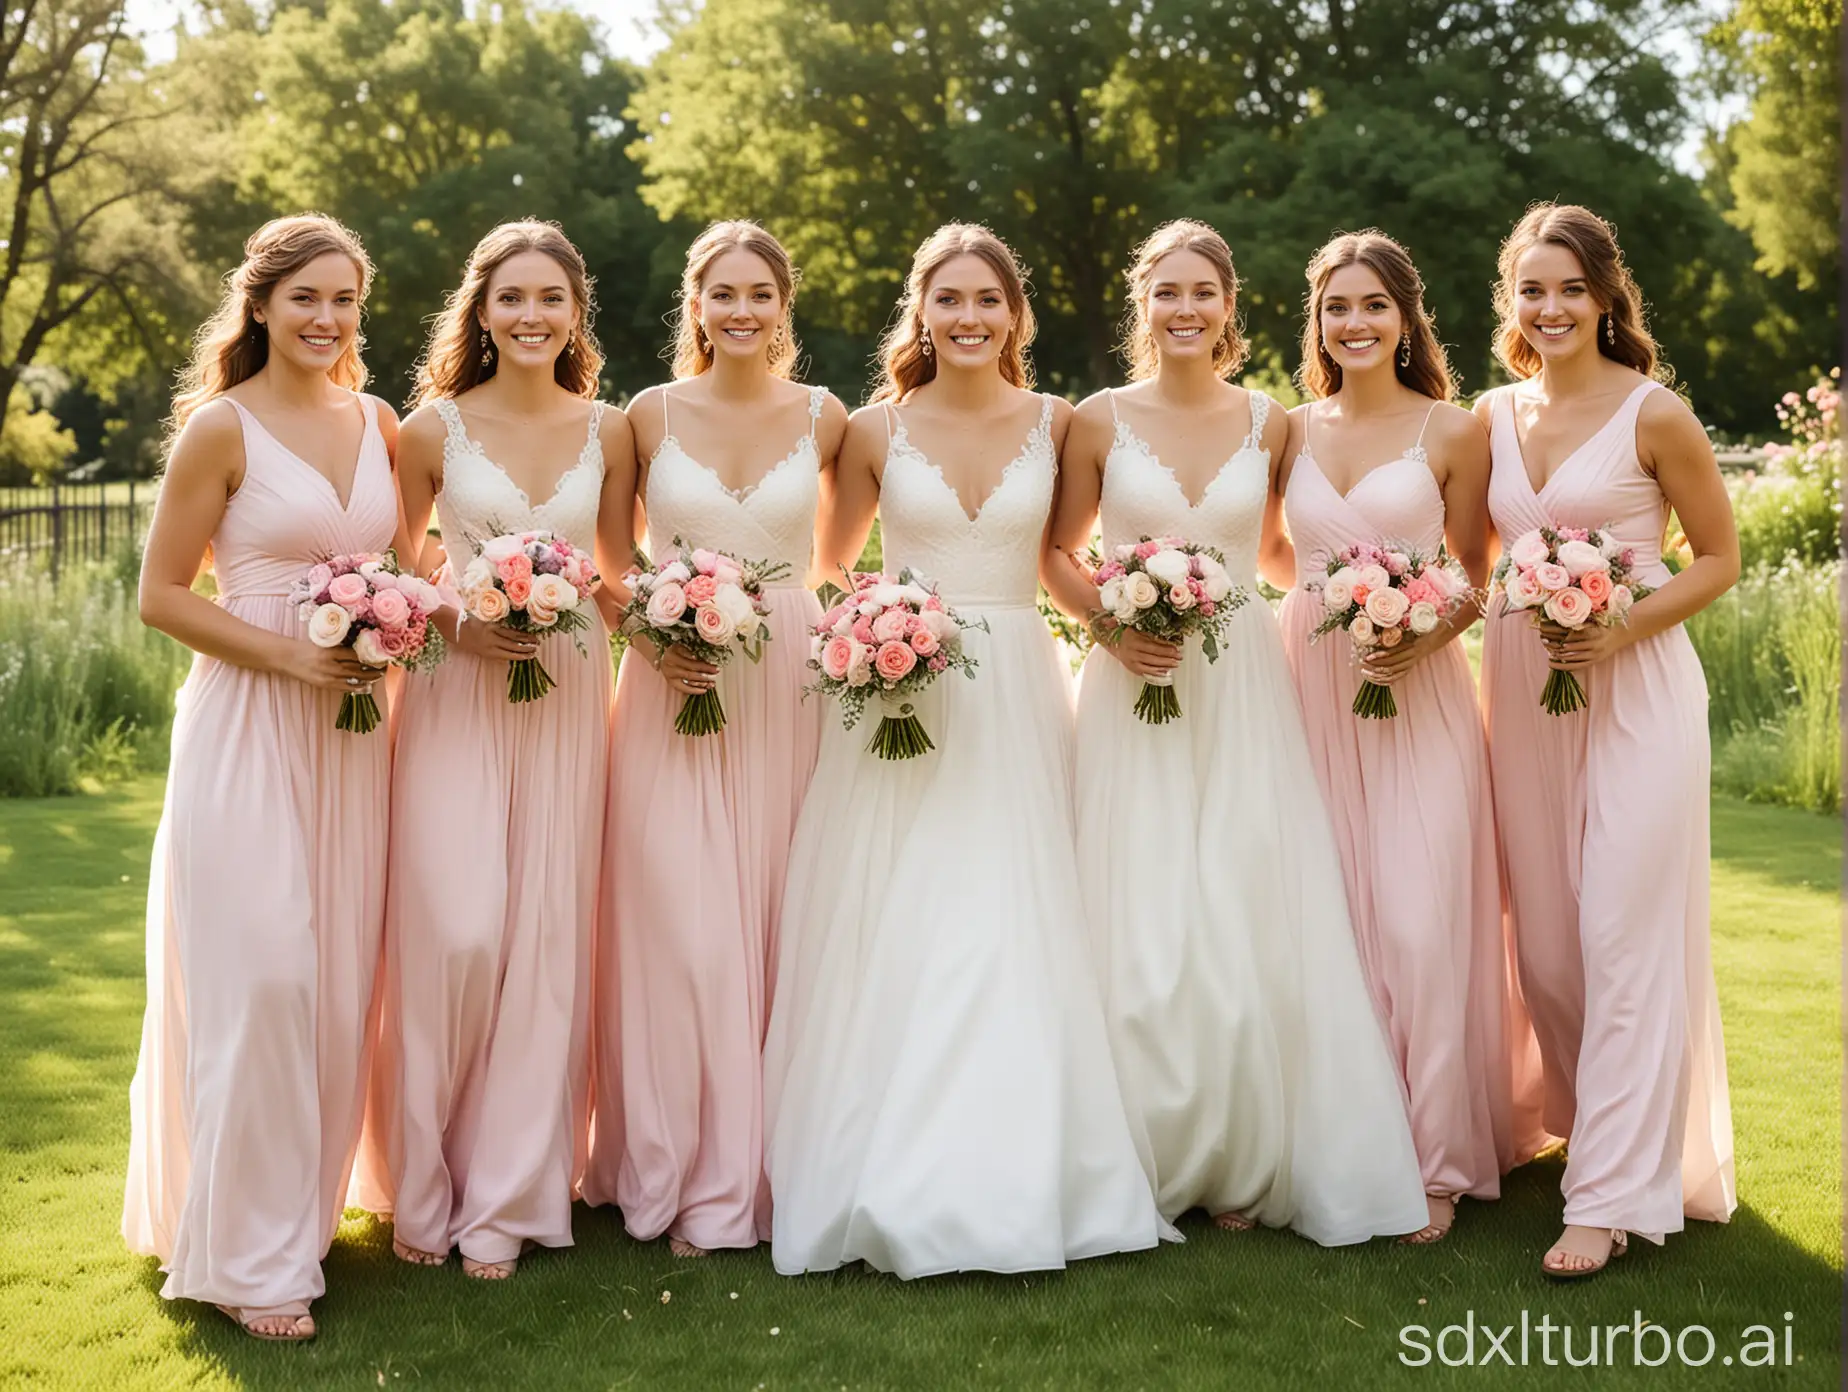 Joyful-American-Wedding-Bride-and-Bridesmaids-in-Pink-Dresses